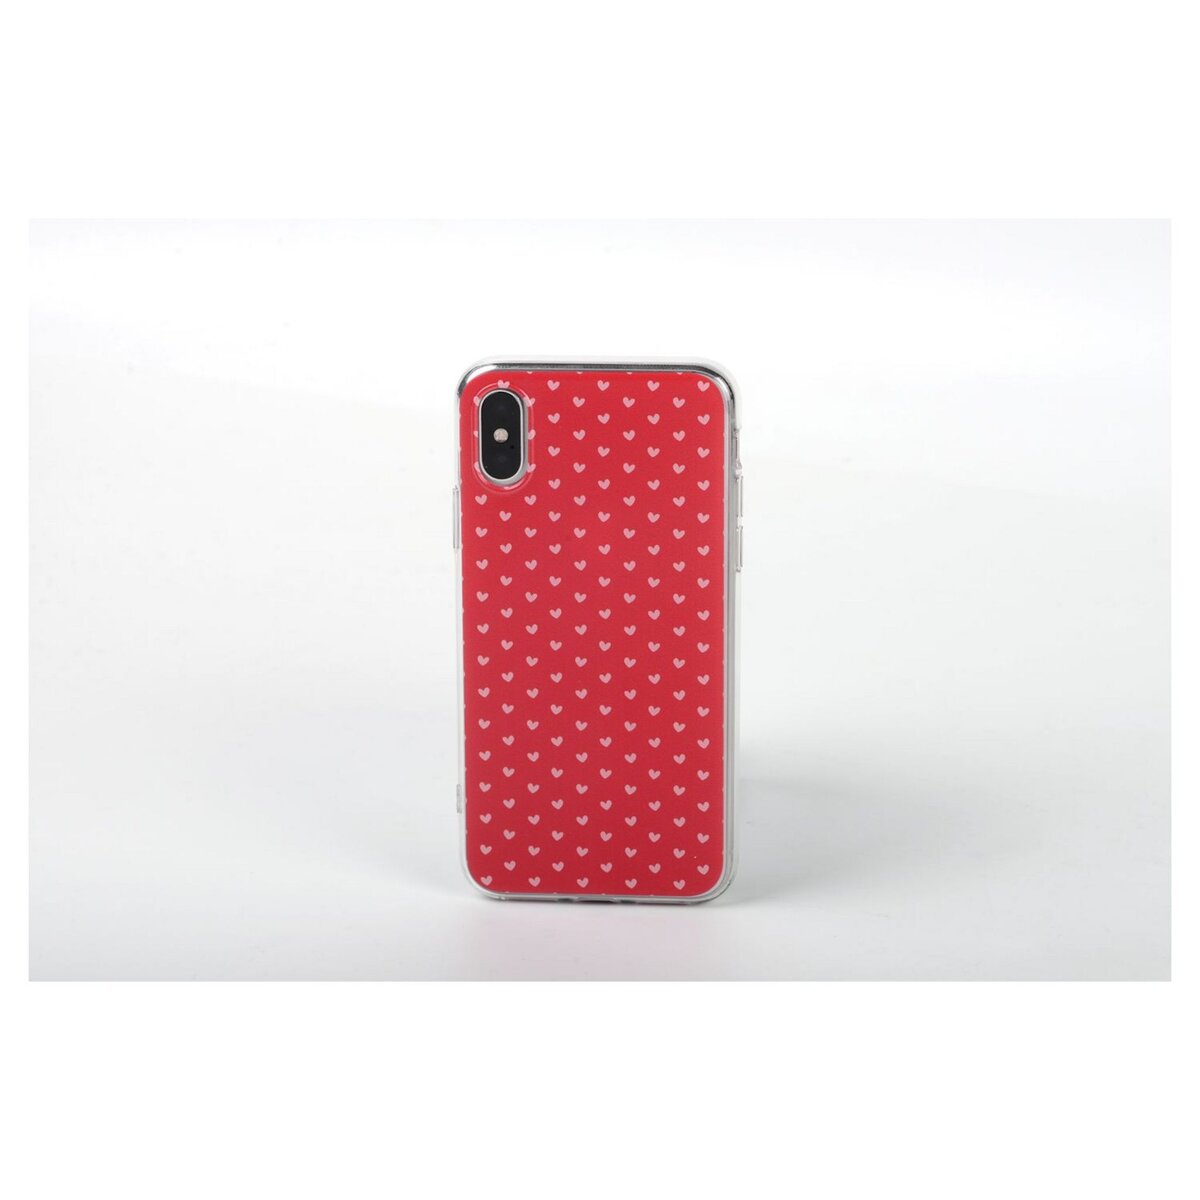 QILIVE Coque Trendy pour Apple iPhone 6/6S/7/8 - Rouge à coeurs roses